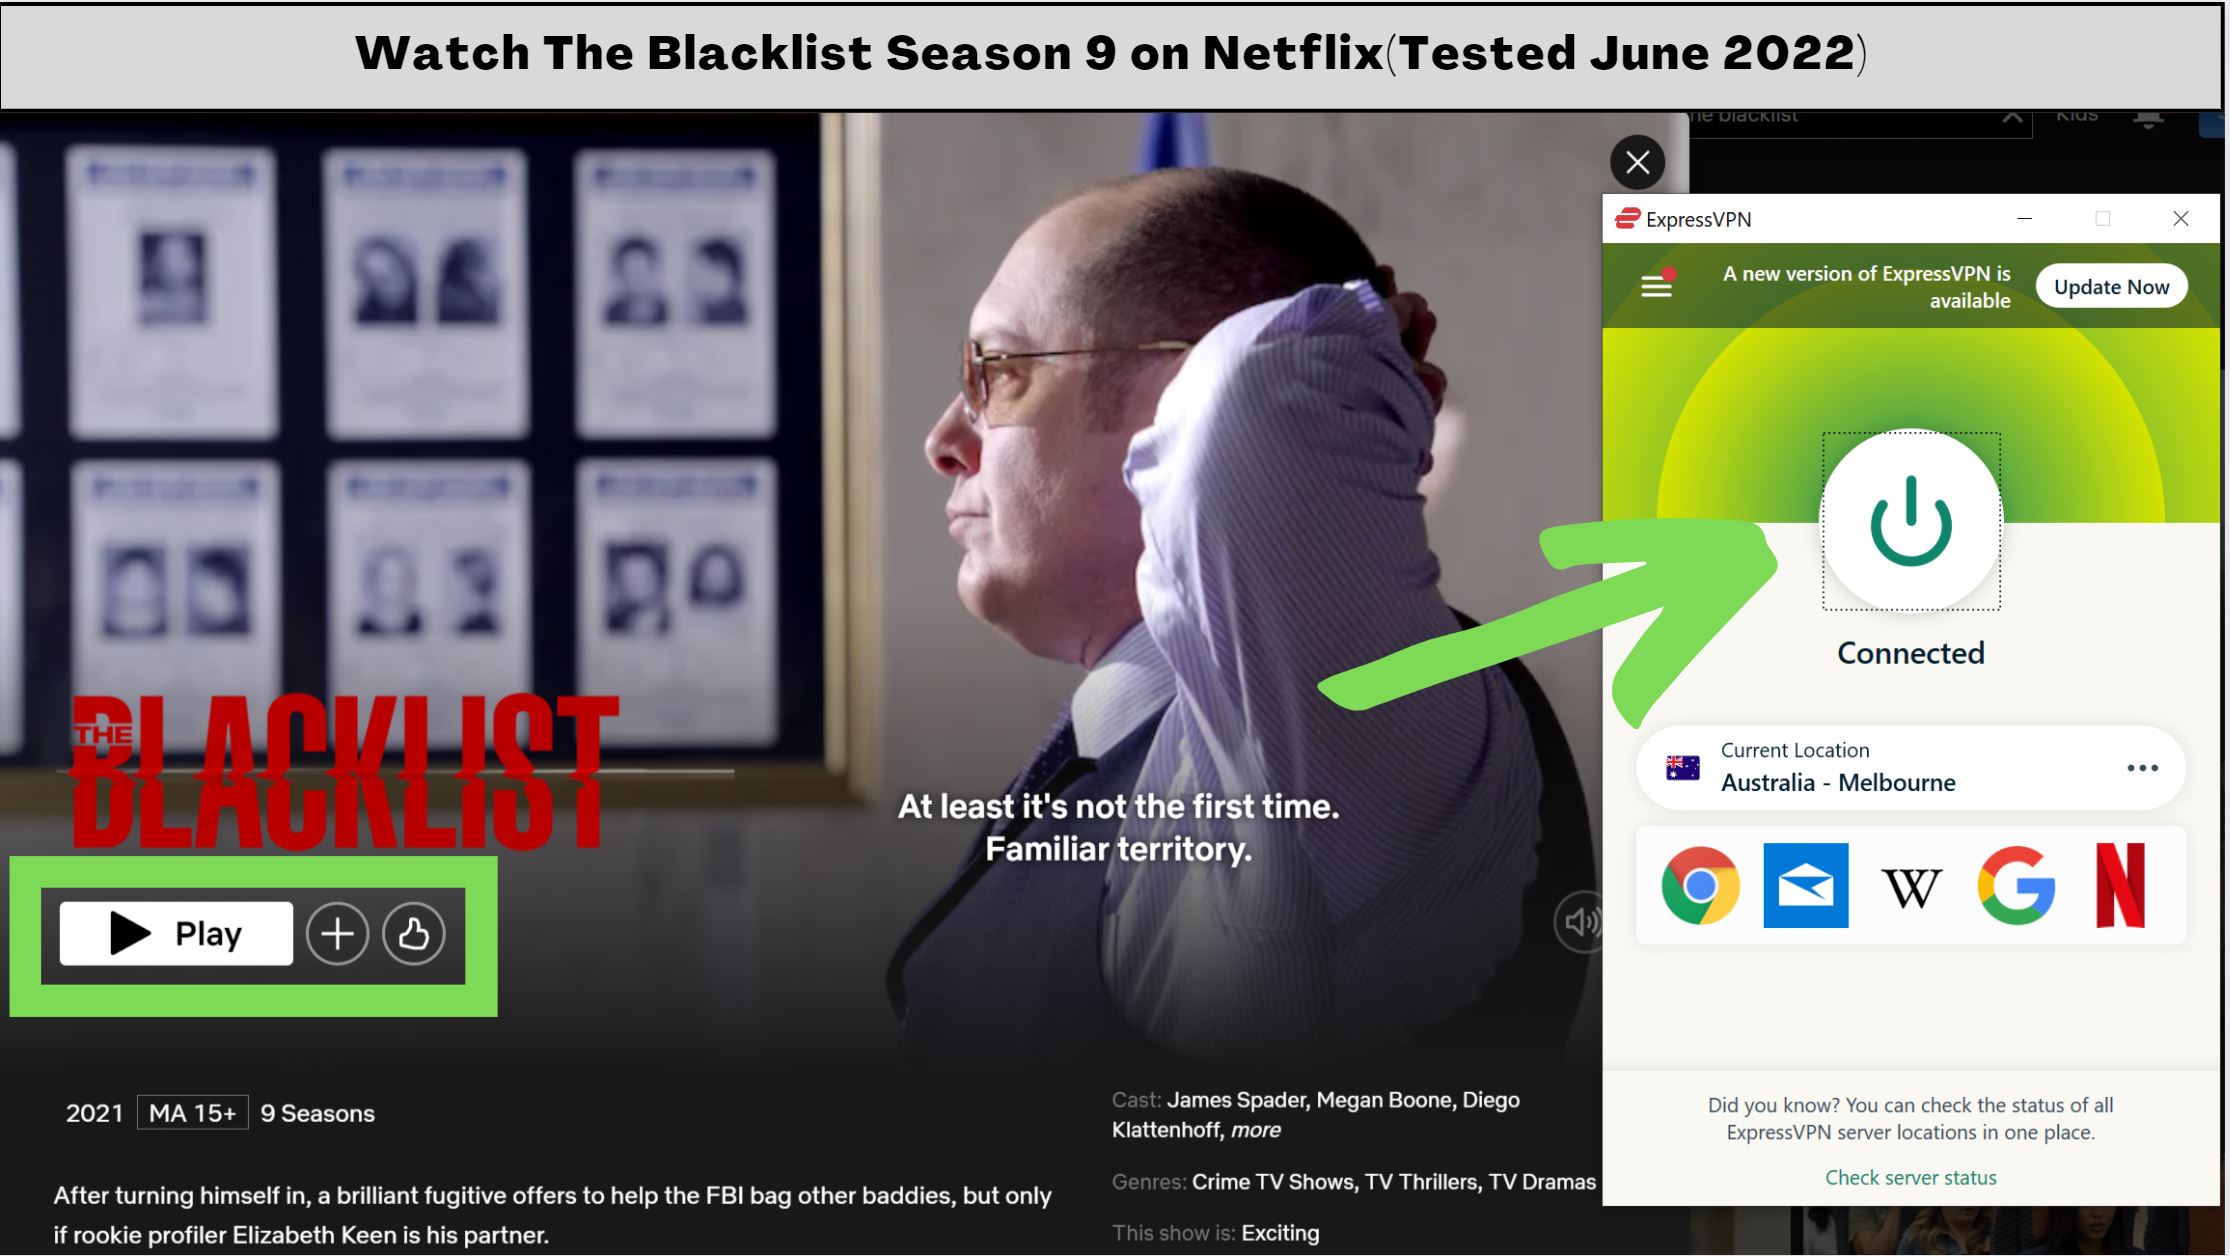 The Blacklist season 9 on Netflix